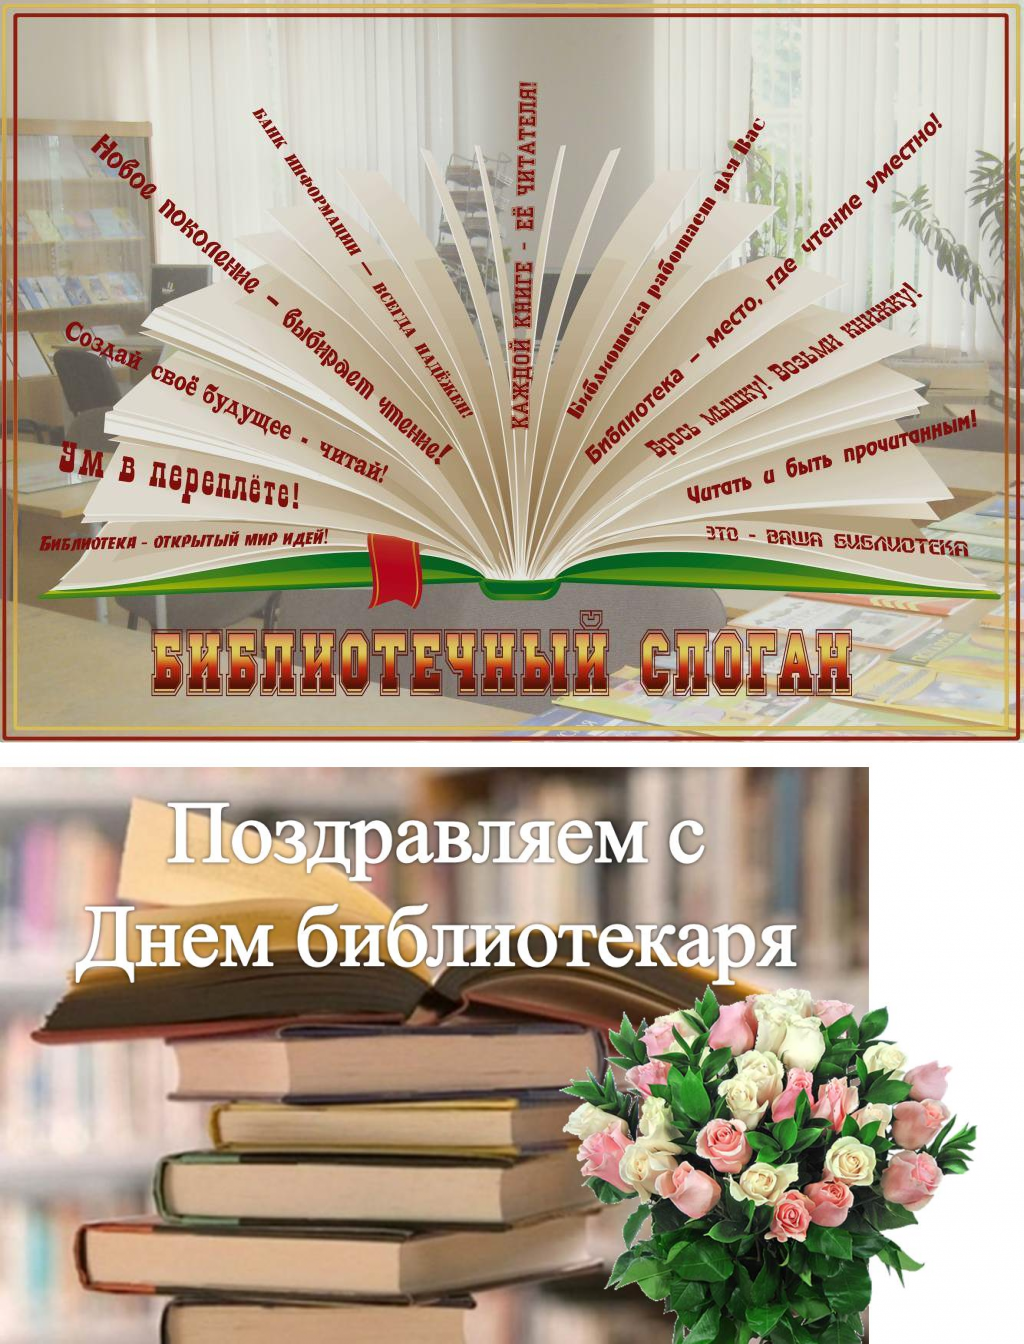 25 лет библиотеке. Поздравление с днем библиотек. С днем библиотекаря поздравления. День библиотекаря. Открытка с днем библиотекаря.